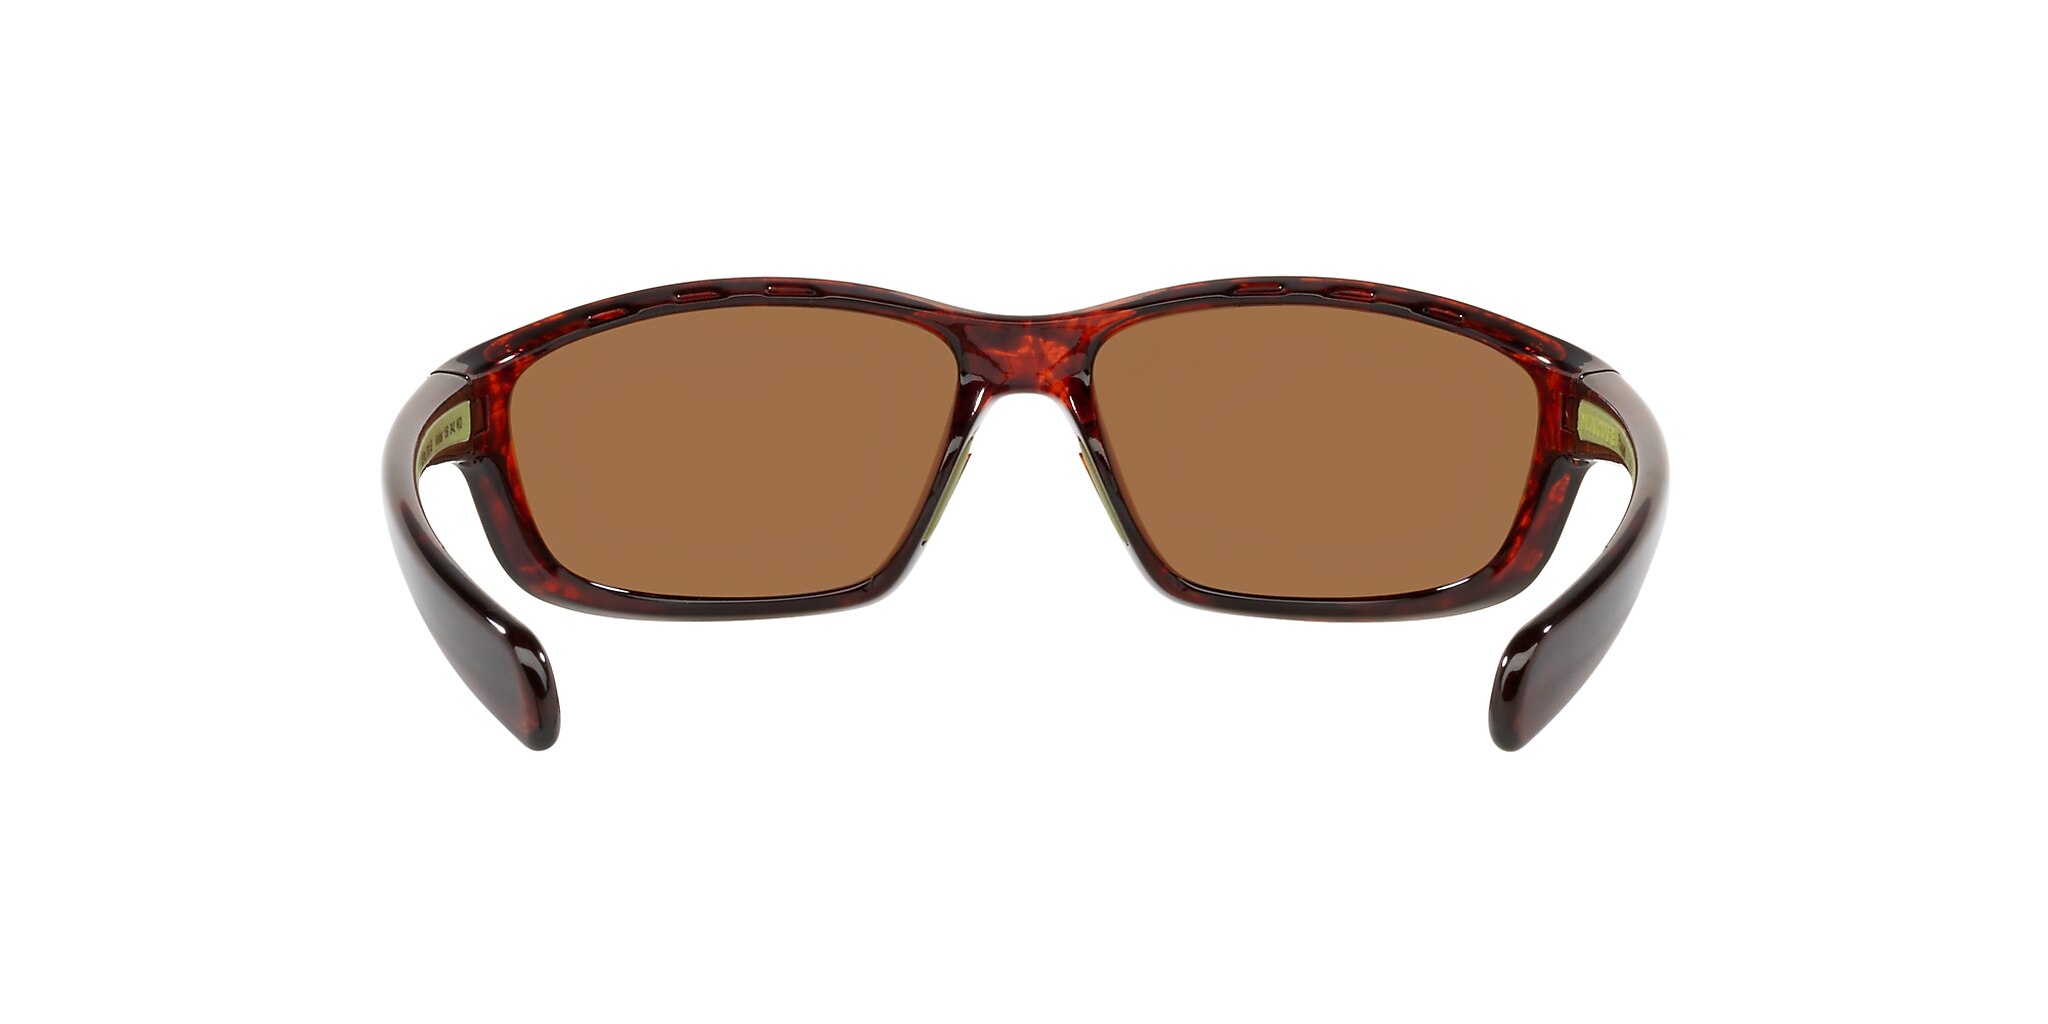 Kodiak Sunglasses in Brown | Native Eyewear®